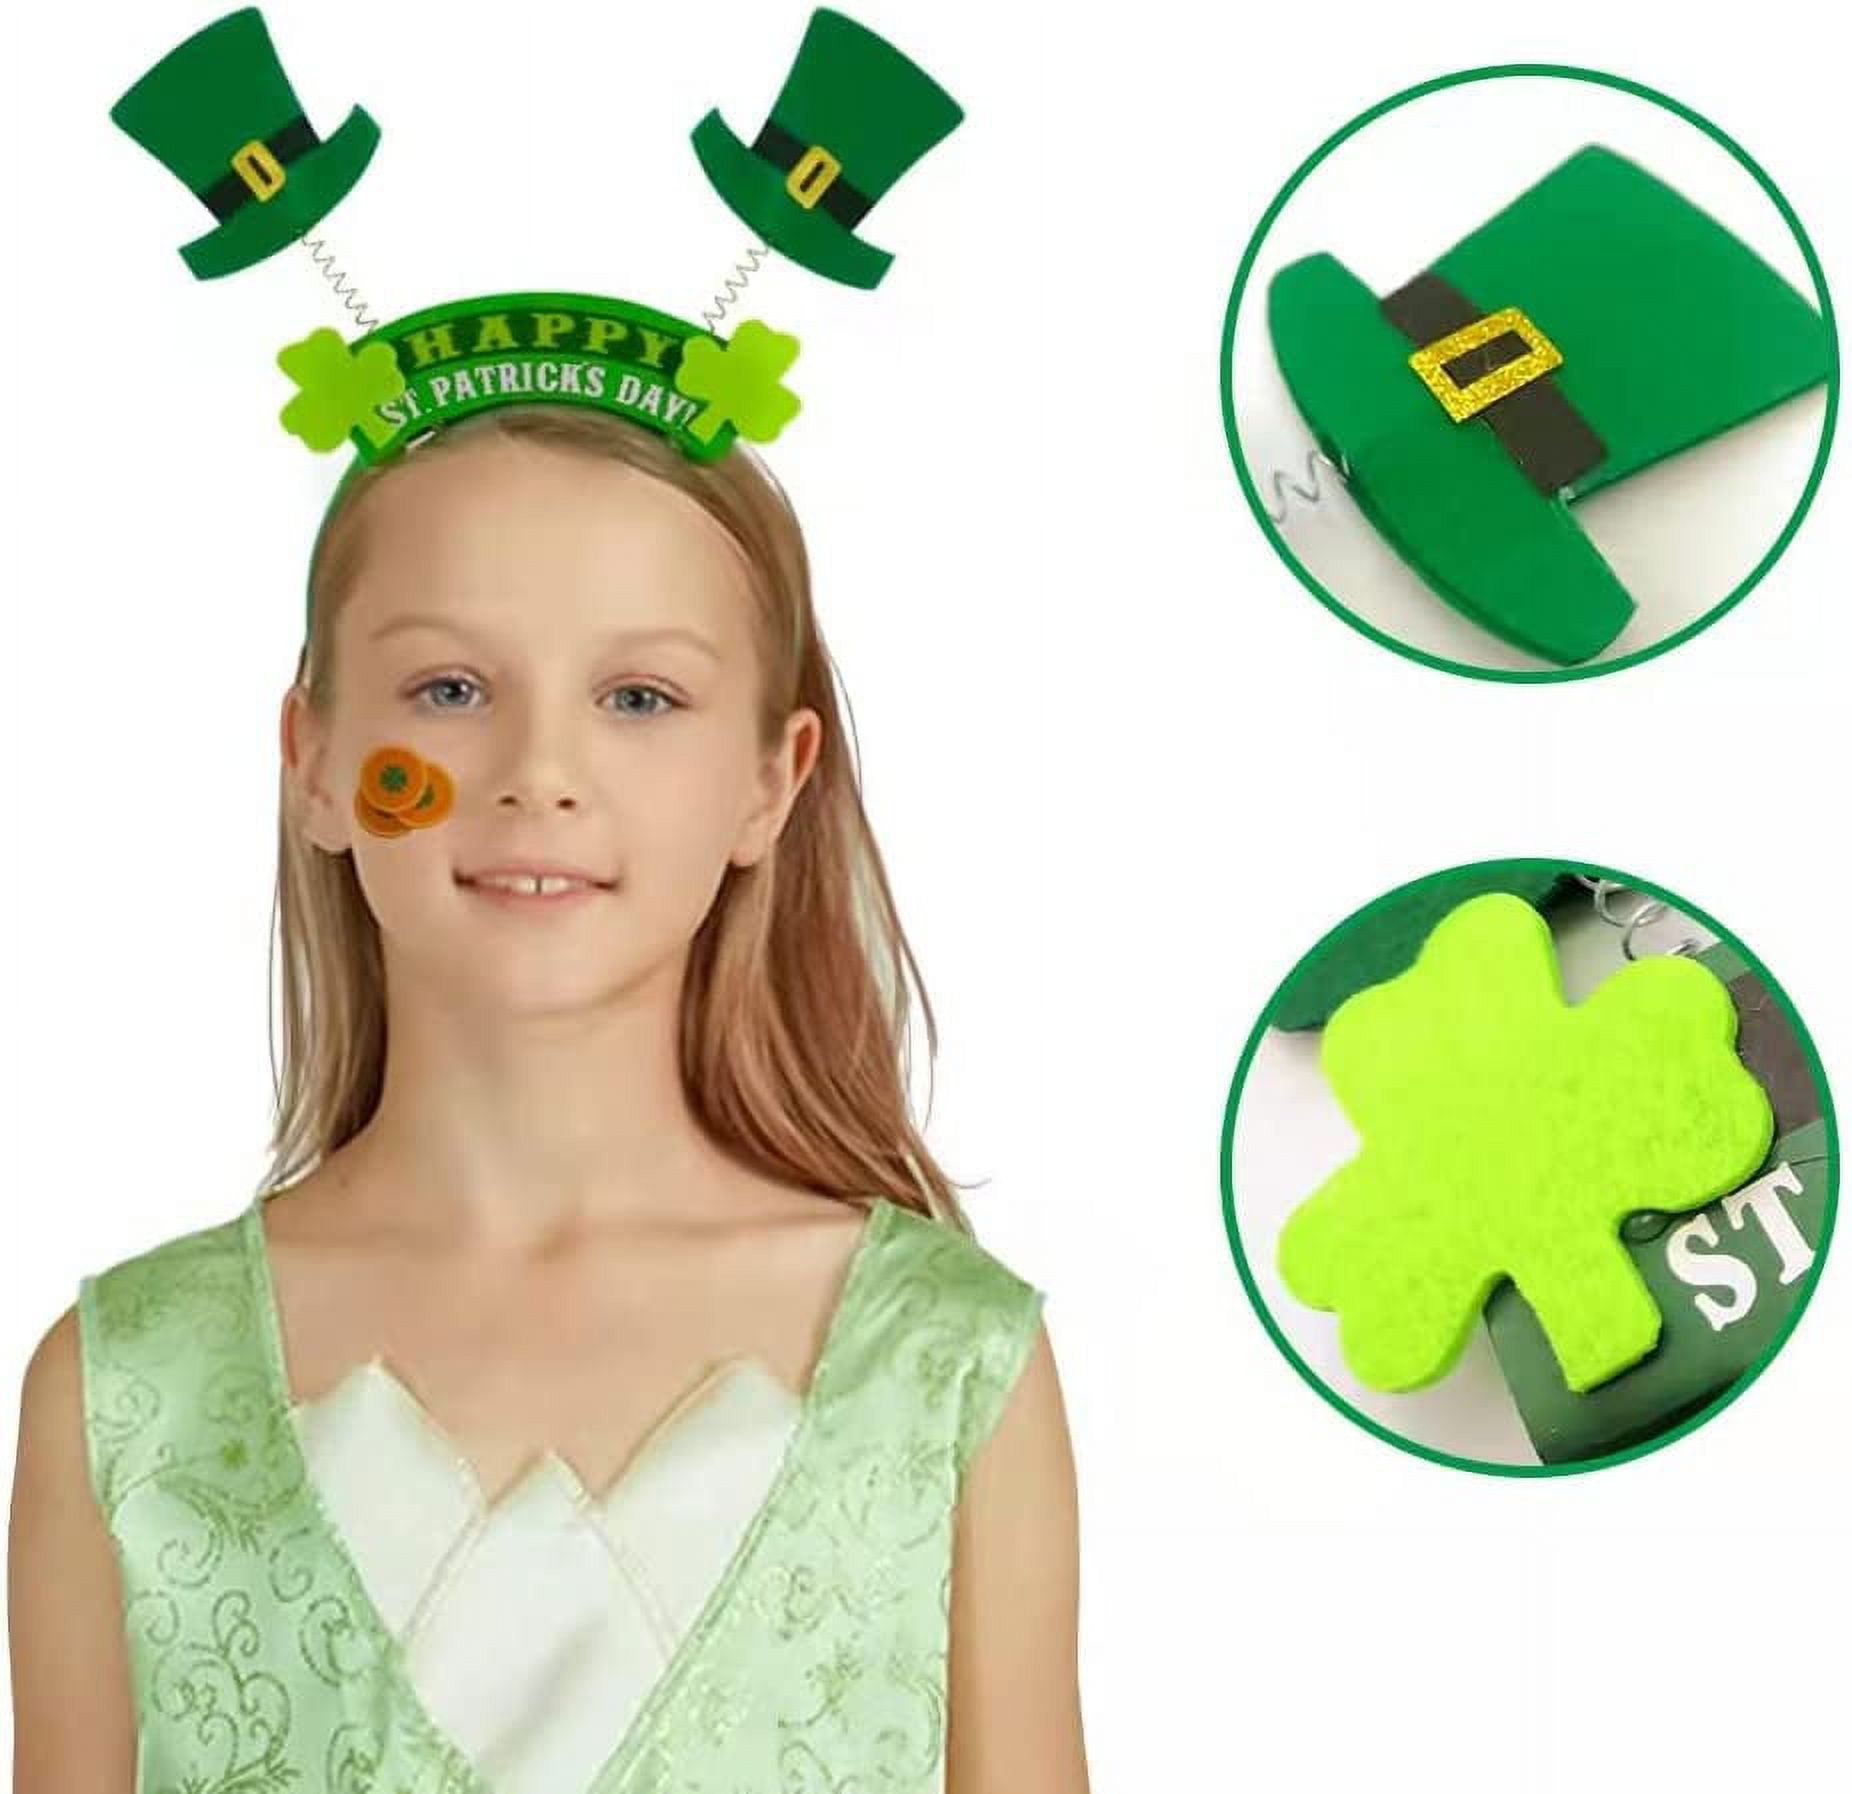 Yaomiao 2 Pieces St. Patrick's Day Headband Green Shamrock Pattern Hairband  with 2 Pairs Saint Patrick's Day Shamrock Teardrop Dangle Earrings Faux  Leather Earrings for Women Girls 